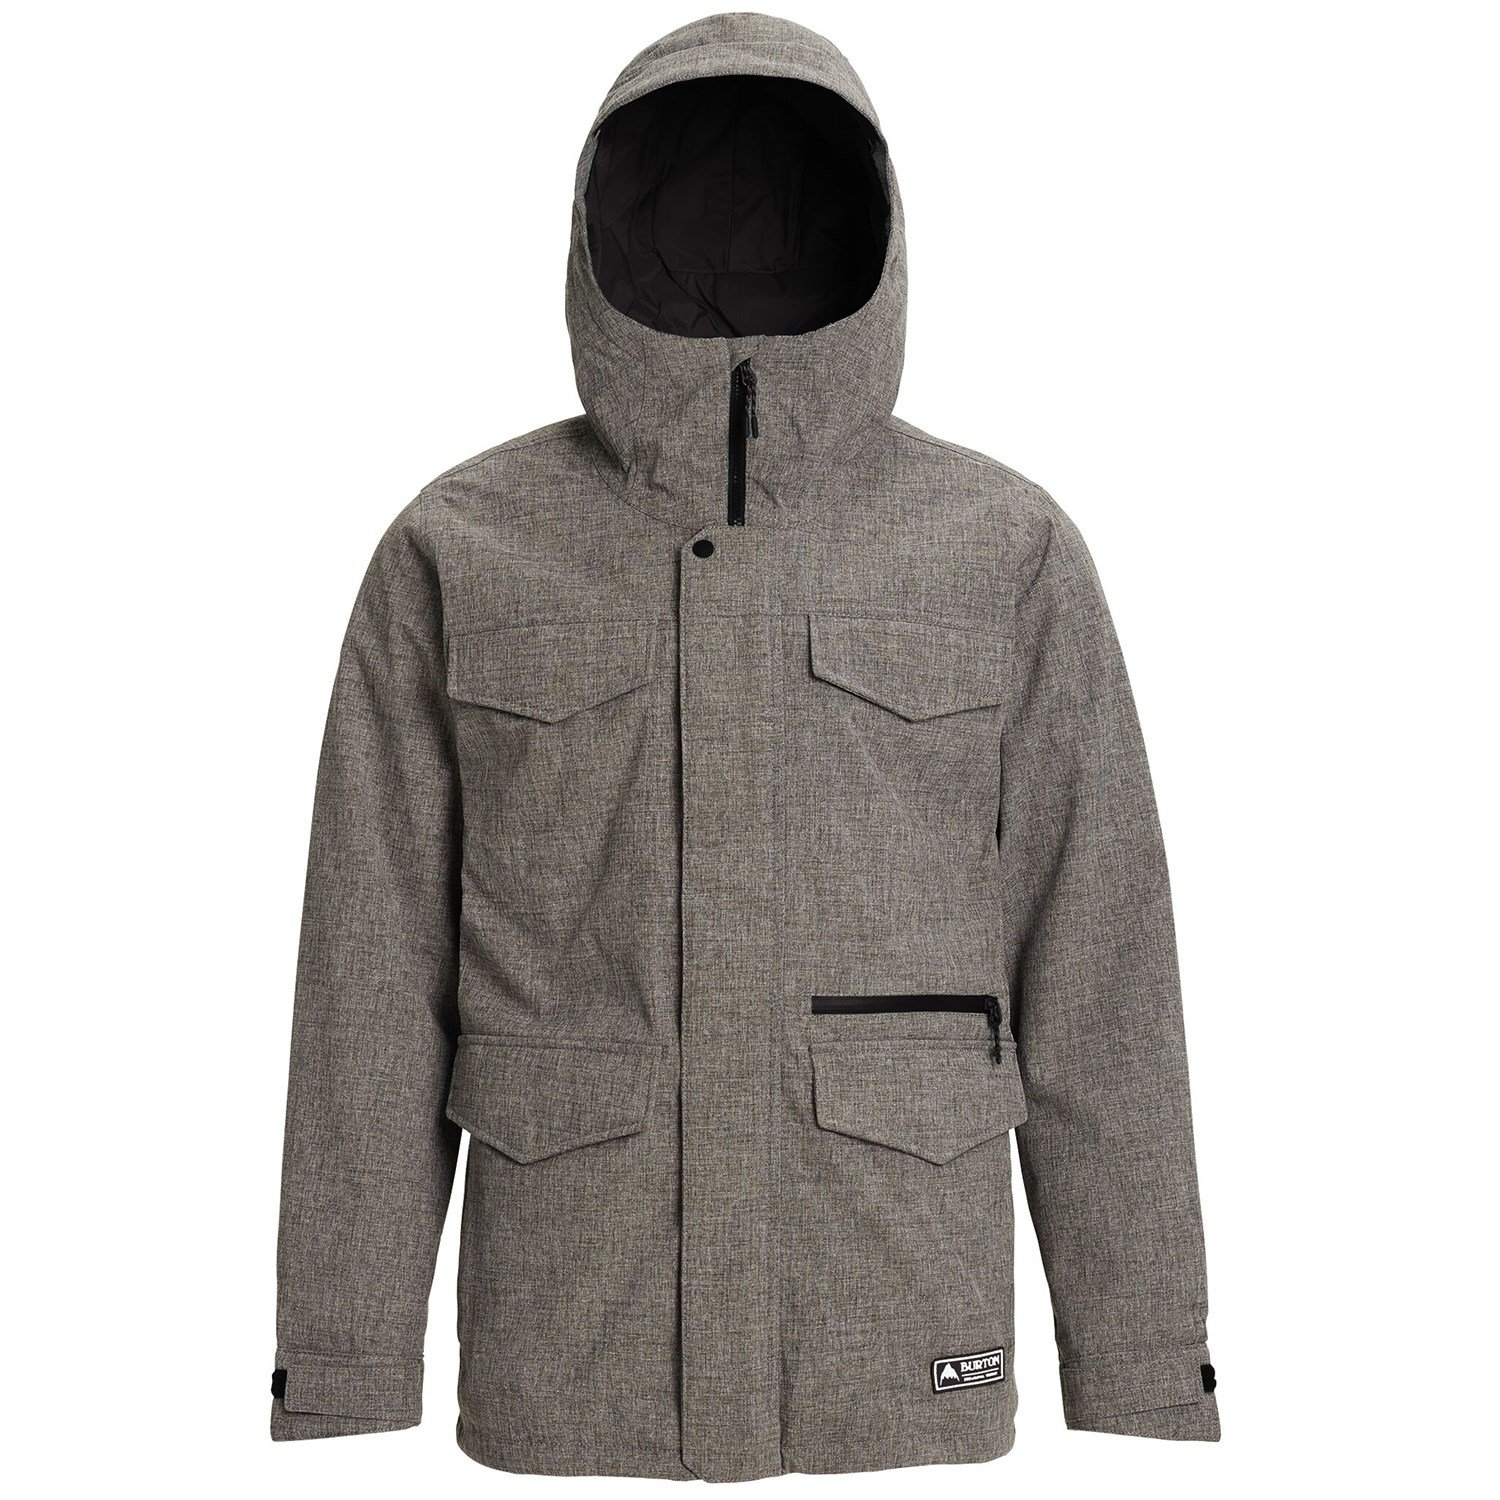 Куртка Burton Covert утепленная, серый куртка утепленная мужская termit серый